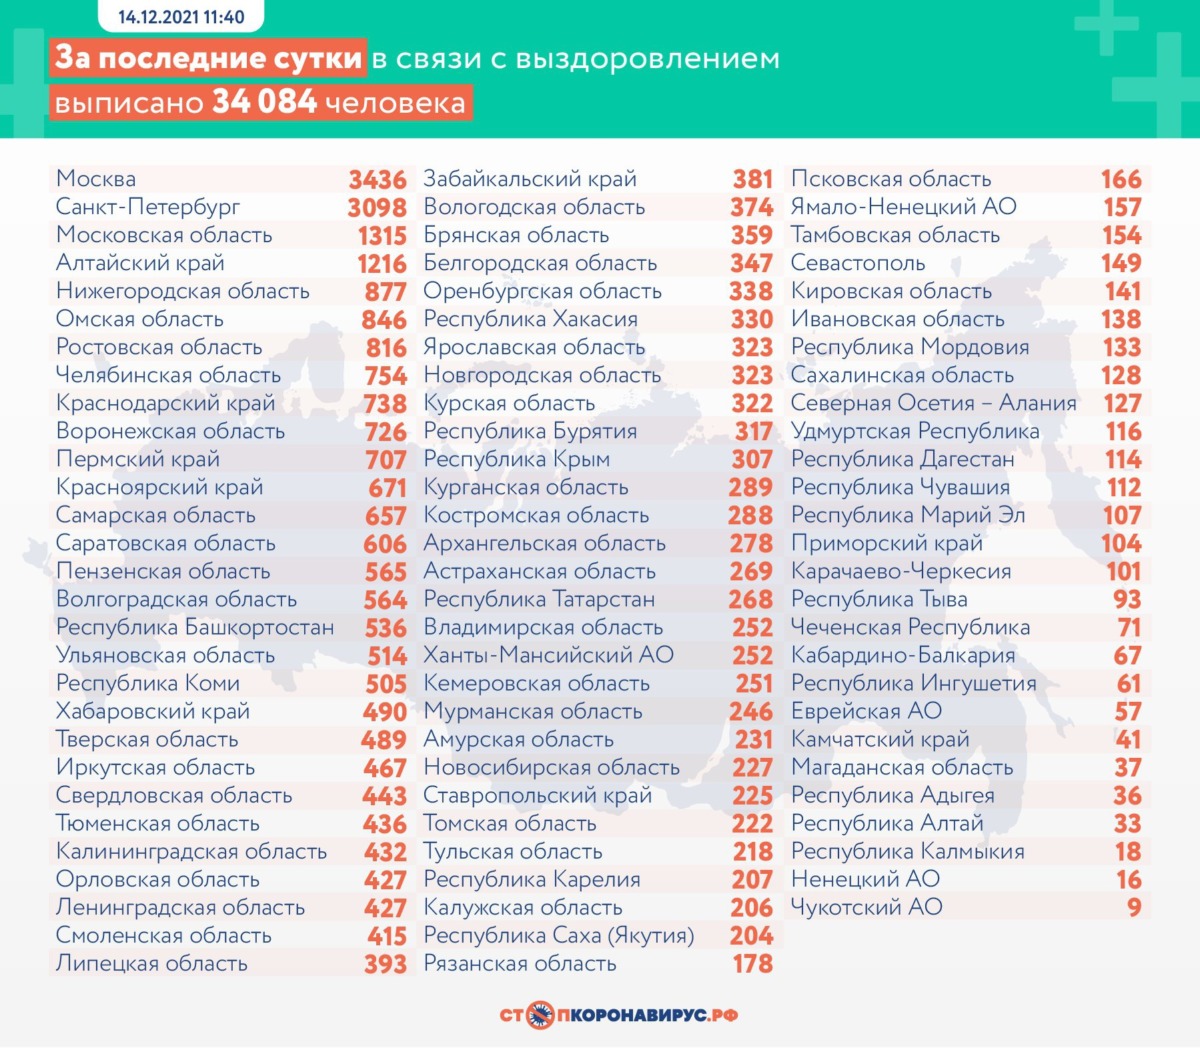 Оперативная статистика по коронавирусу в России на 14 декабря